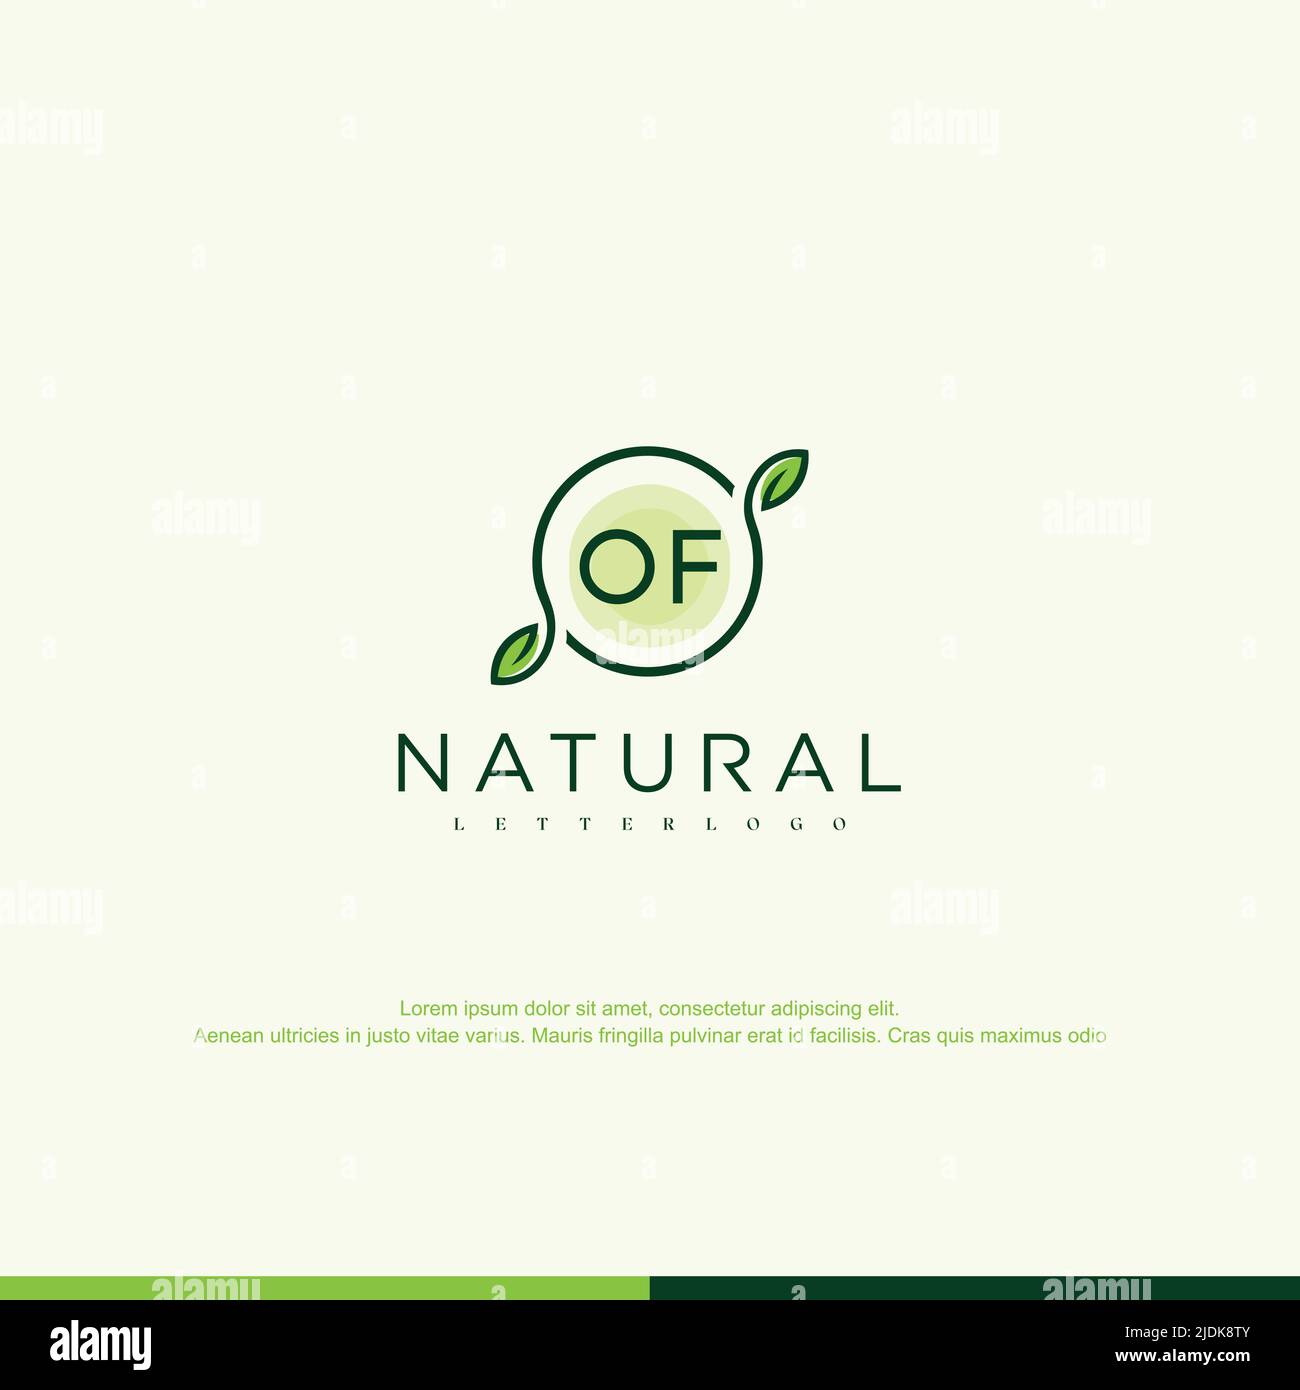 OF Initial natural logo template vector Stock Vector